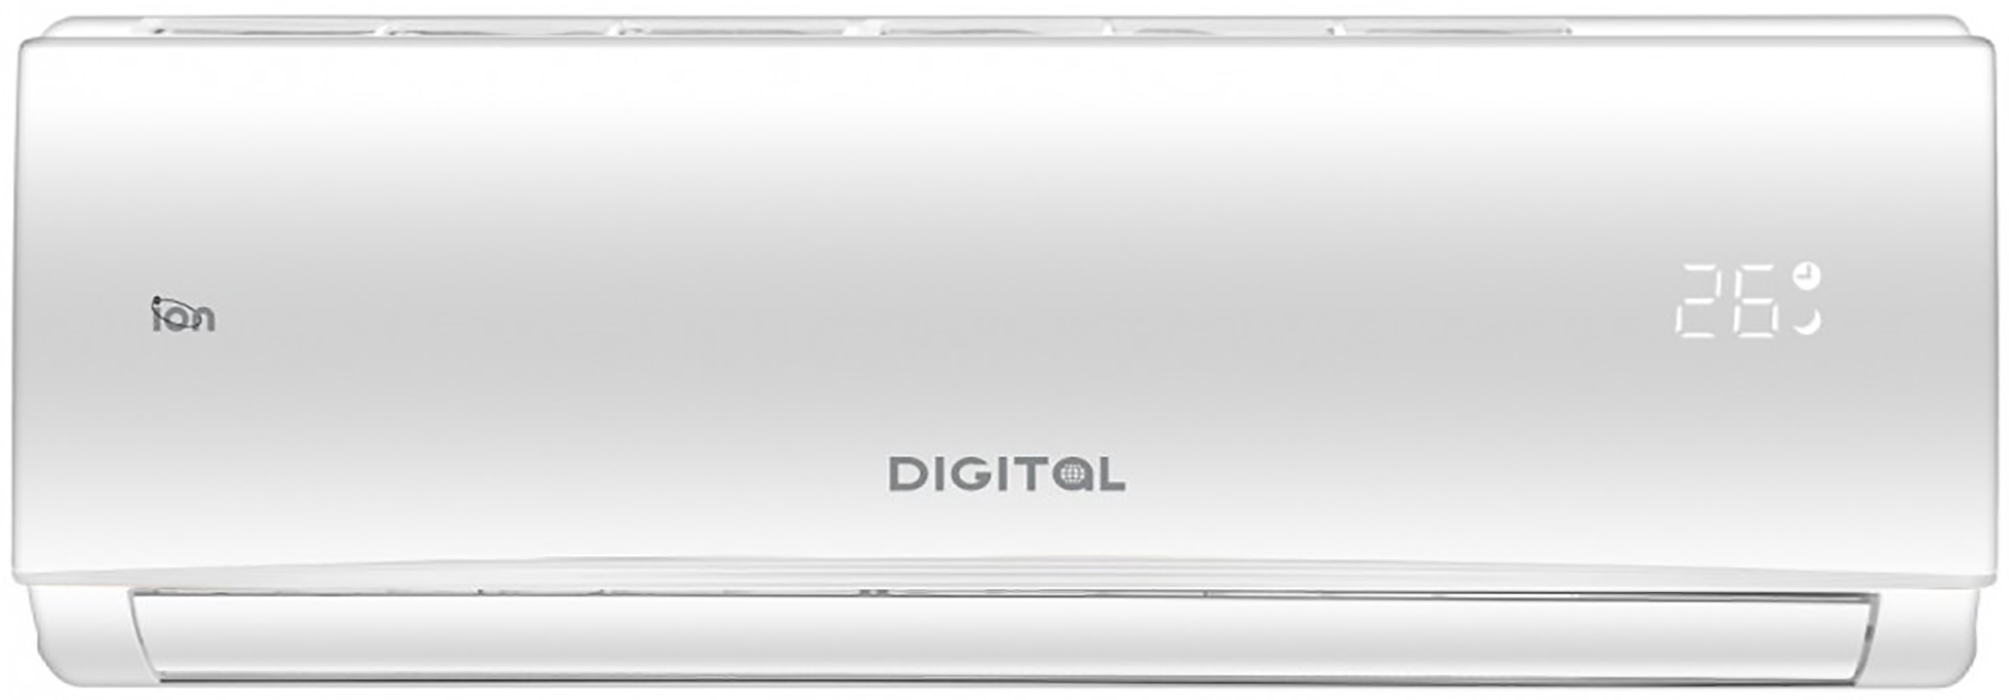 Кондиционер сплит-система Digital DAC-i09EWT (Wi-Fi ready) цена 0.00 грн - фотография 2